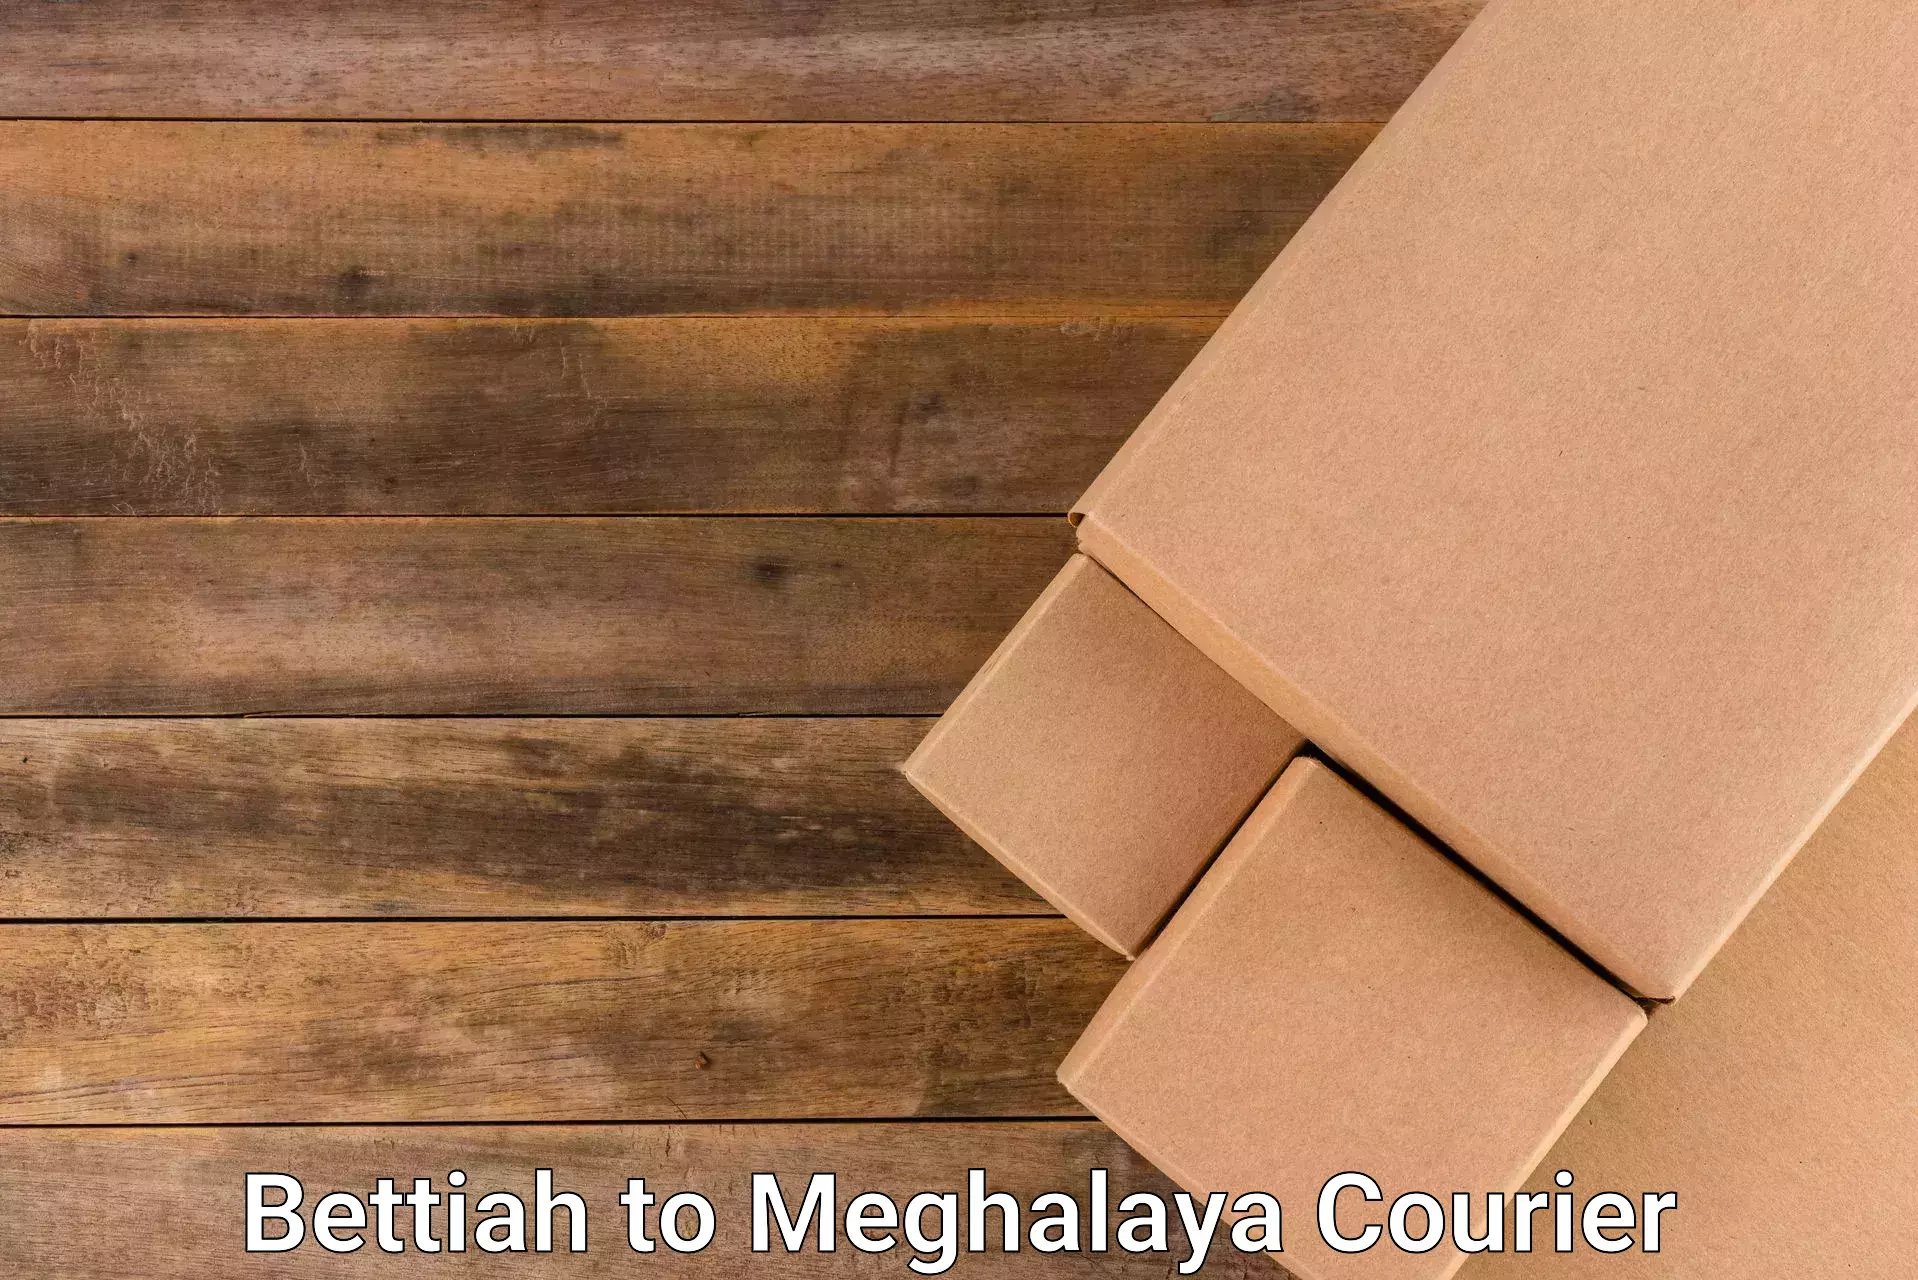 Global courier networks Bettiah to Jowai